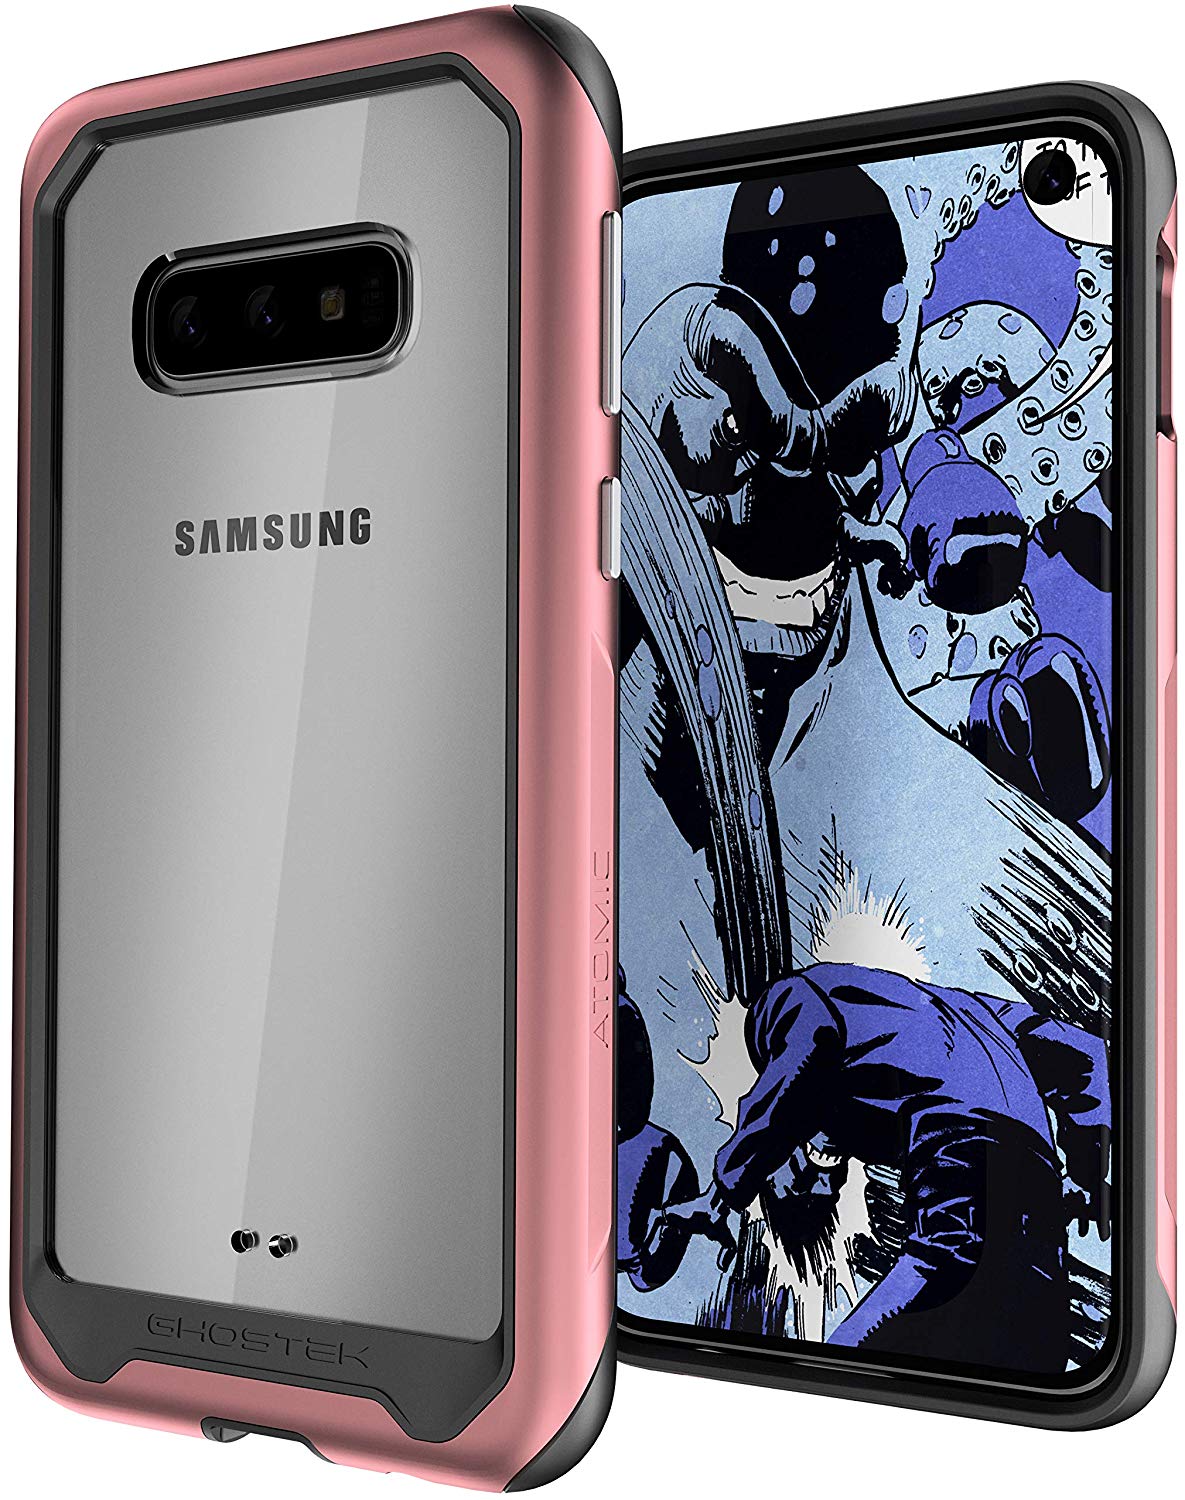 Premium Galaxy S10 5G Case for Samsung S10 S10e S10+ Ghostek Atomic Slim (Pink) - image 2 of 9